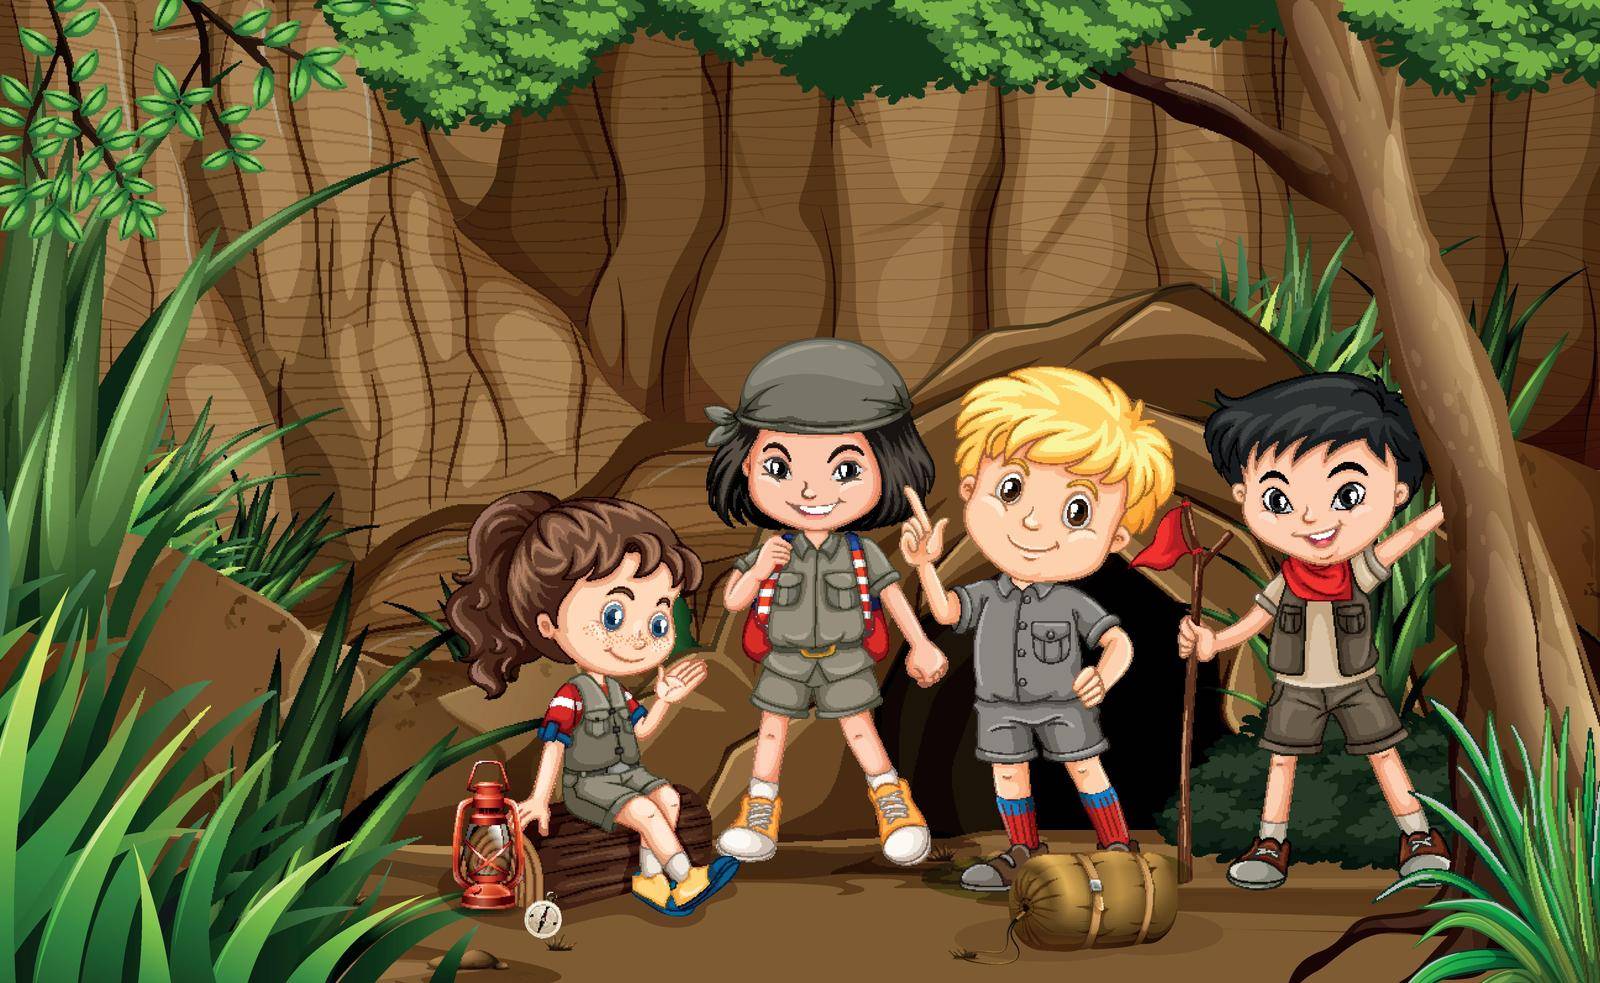 Friends in a Jungle illustration